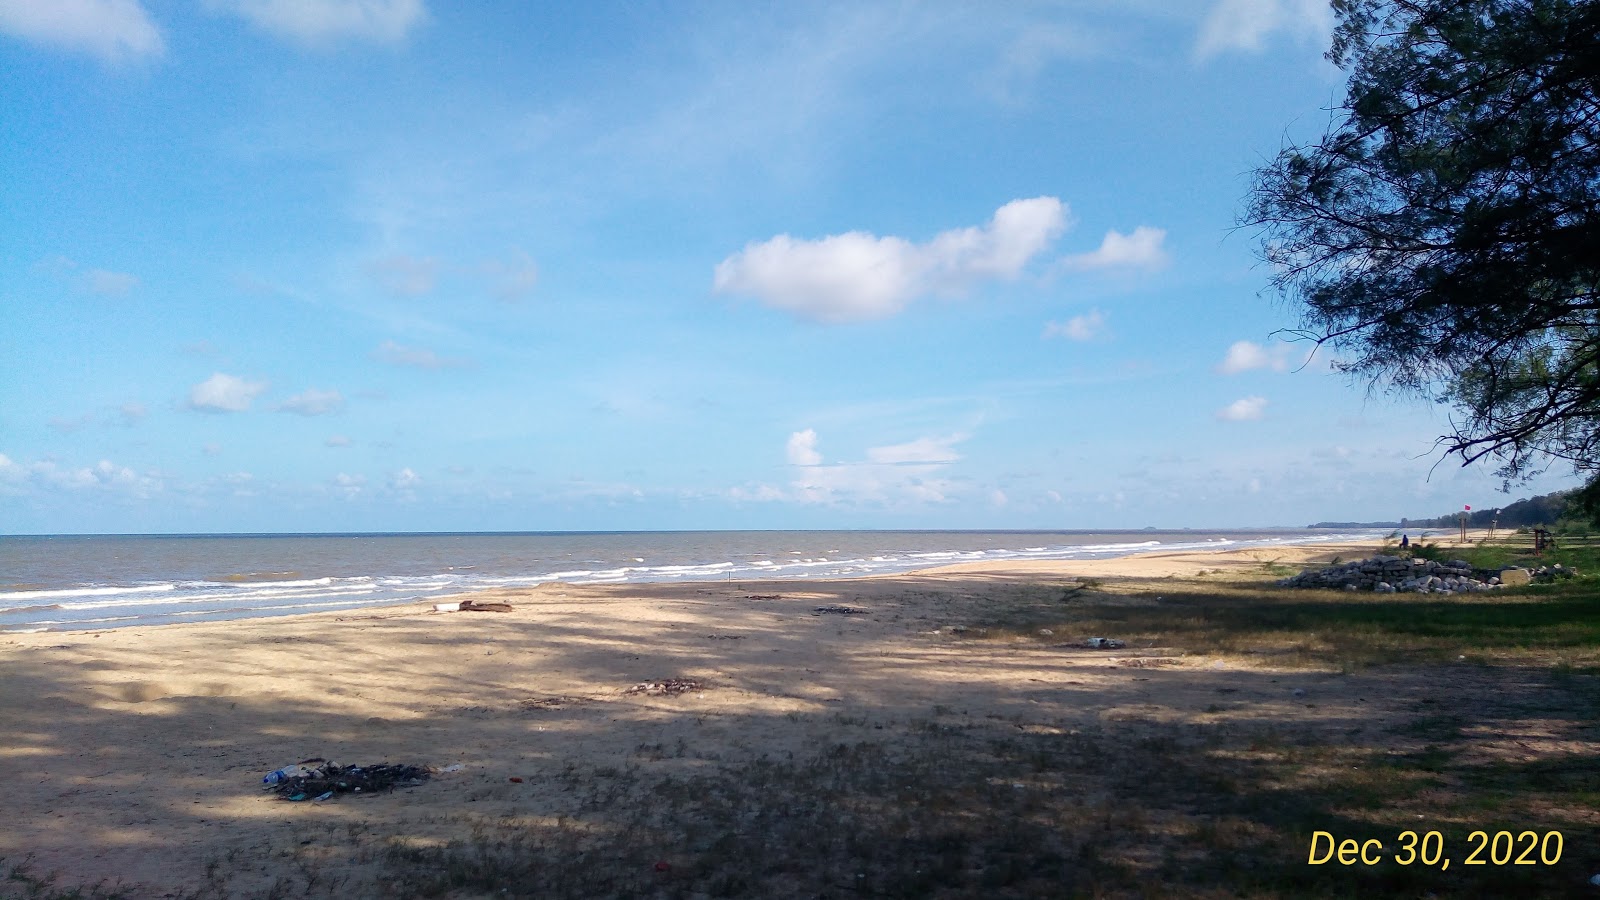 Photo of Rantau Panjang Beach with turquoise water surface